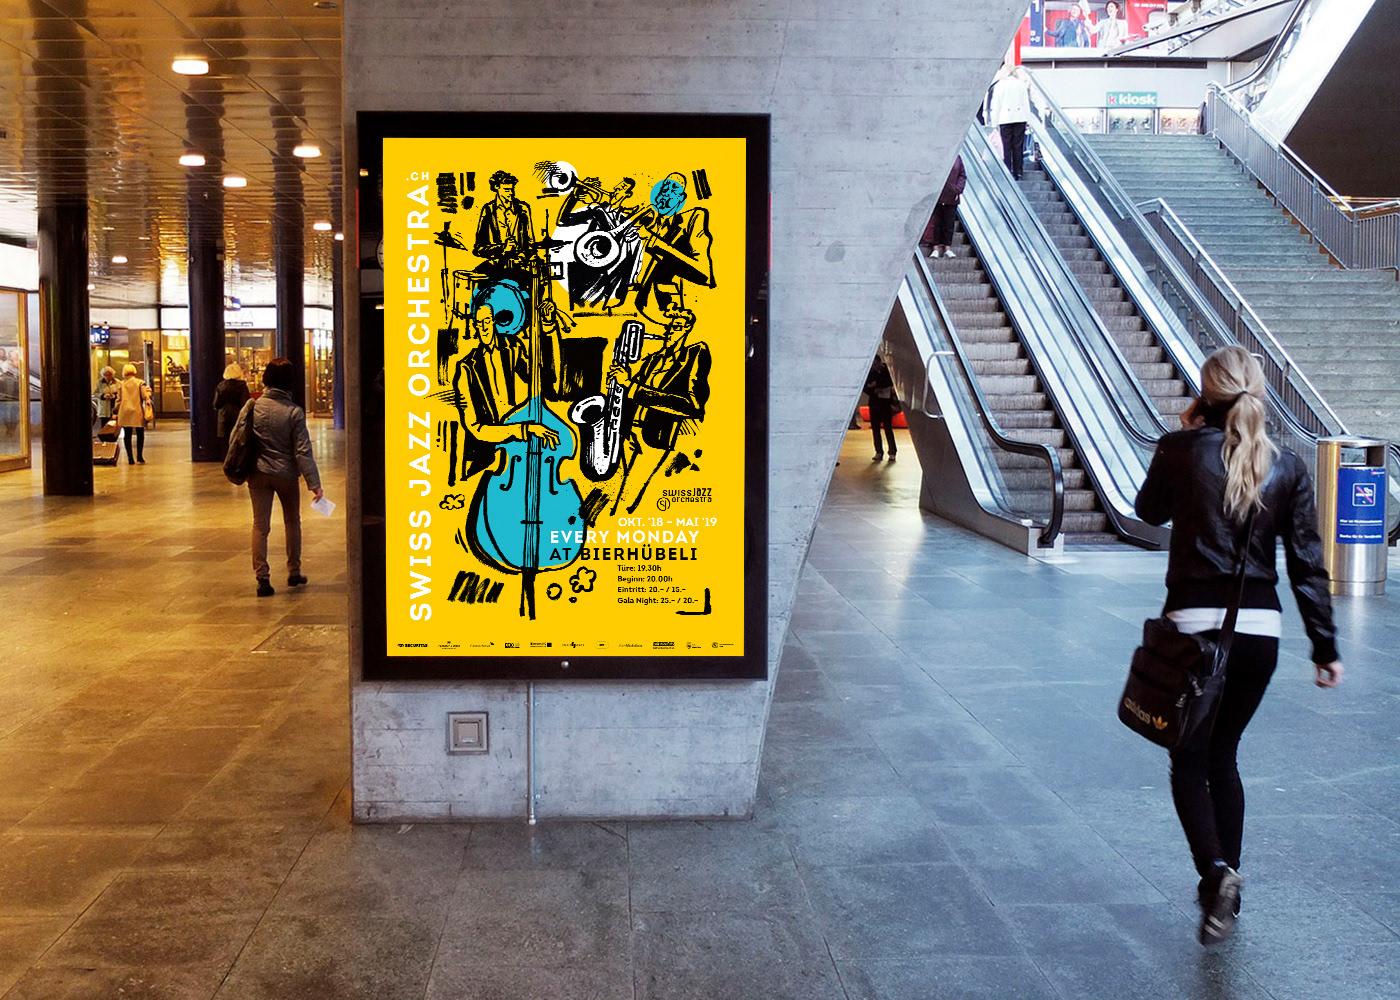 advertisement ILLUSTRATION  ink jazz jazzillustration music musicposter orchestra poster swiss